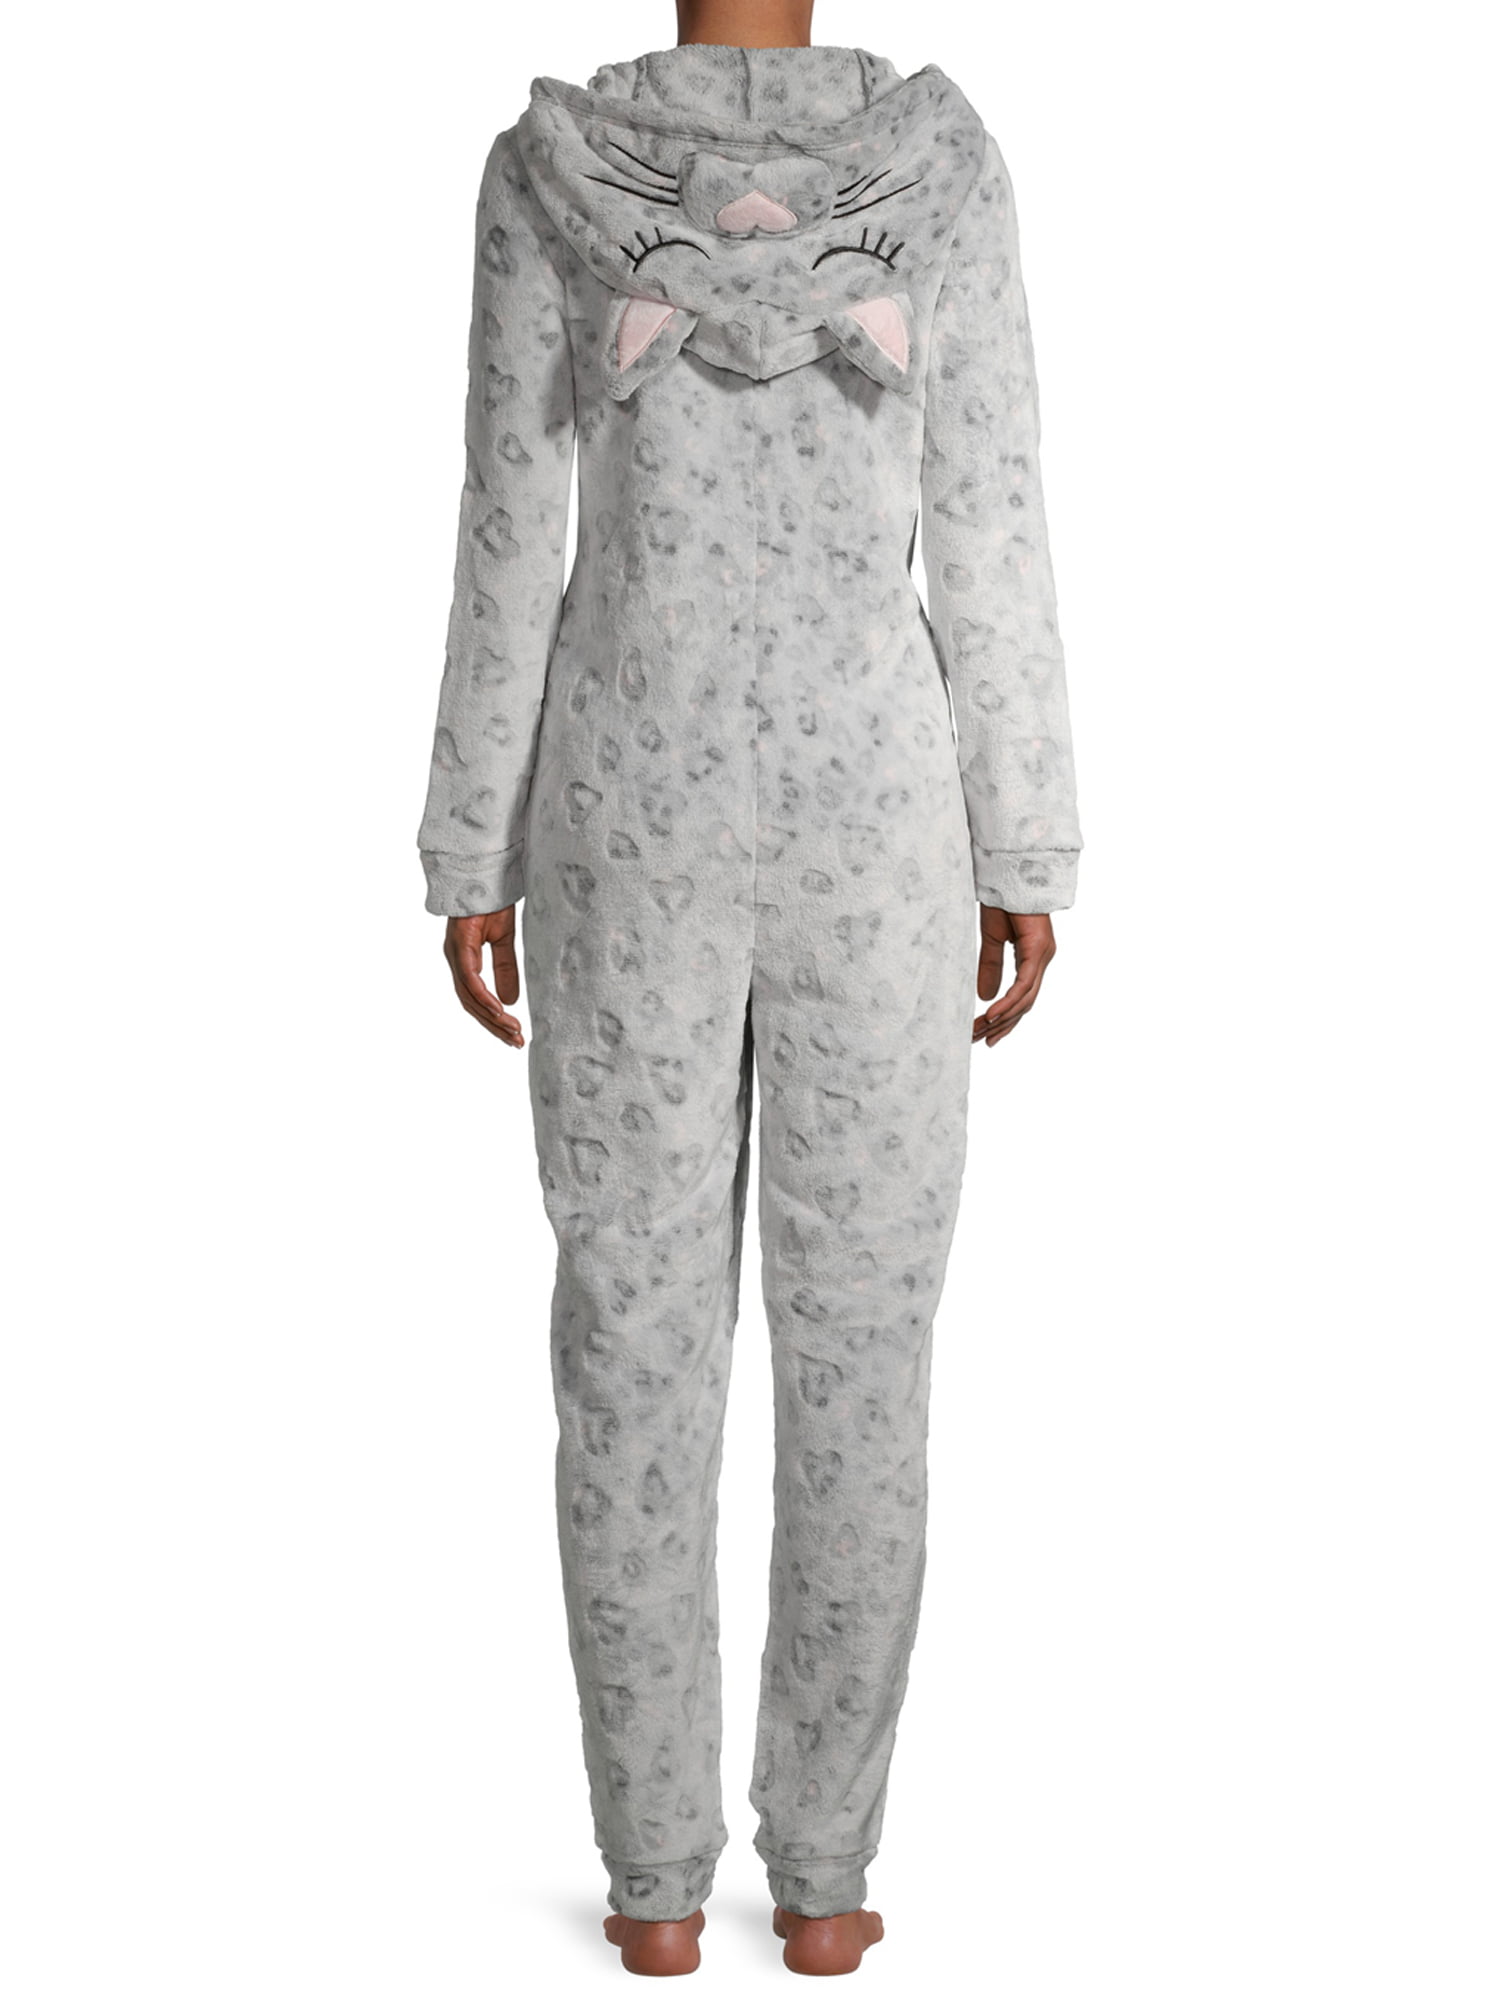 Peace, Love & Dreams Women\'s Grey Cat Print Pajama Union Suit